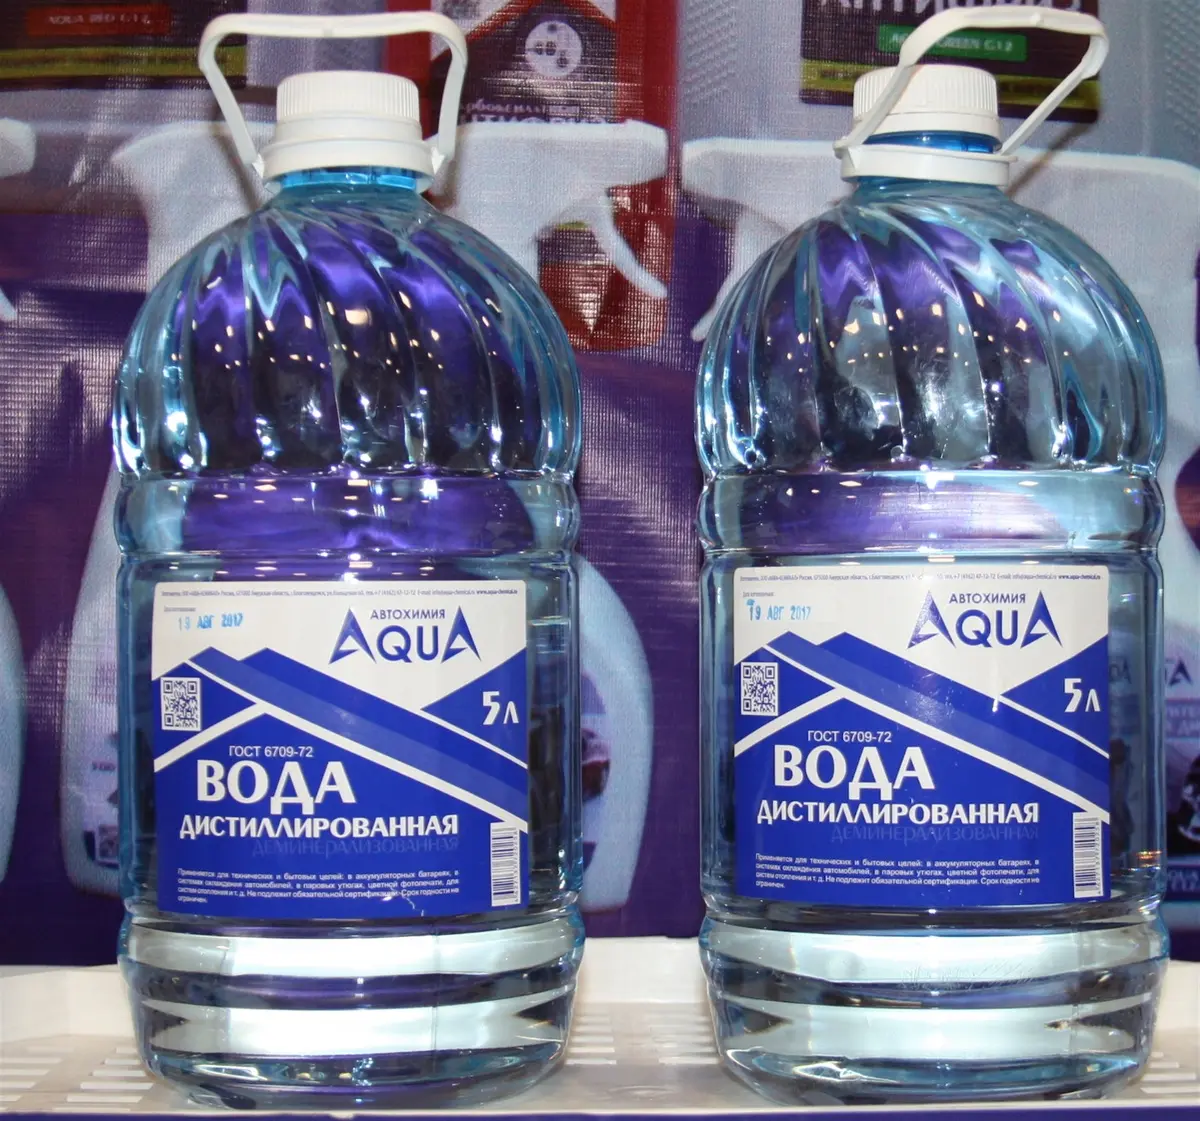 Вода деминерализованная, Дистиллиро́ванная вода́, AQUA, АКВА-КЕМИКАЛ, aqua-chemical